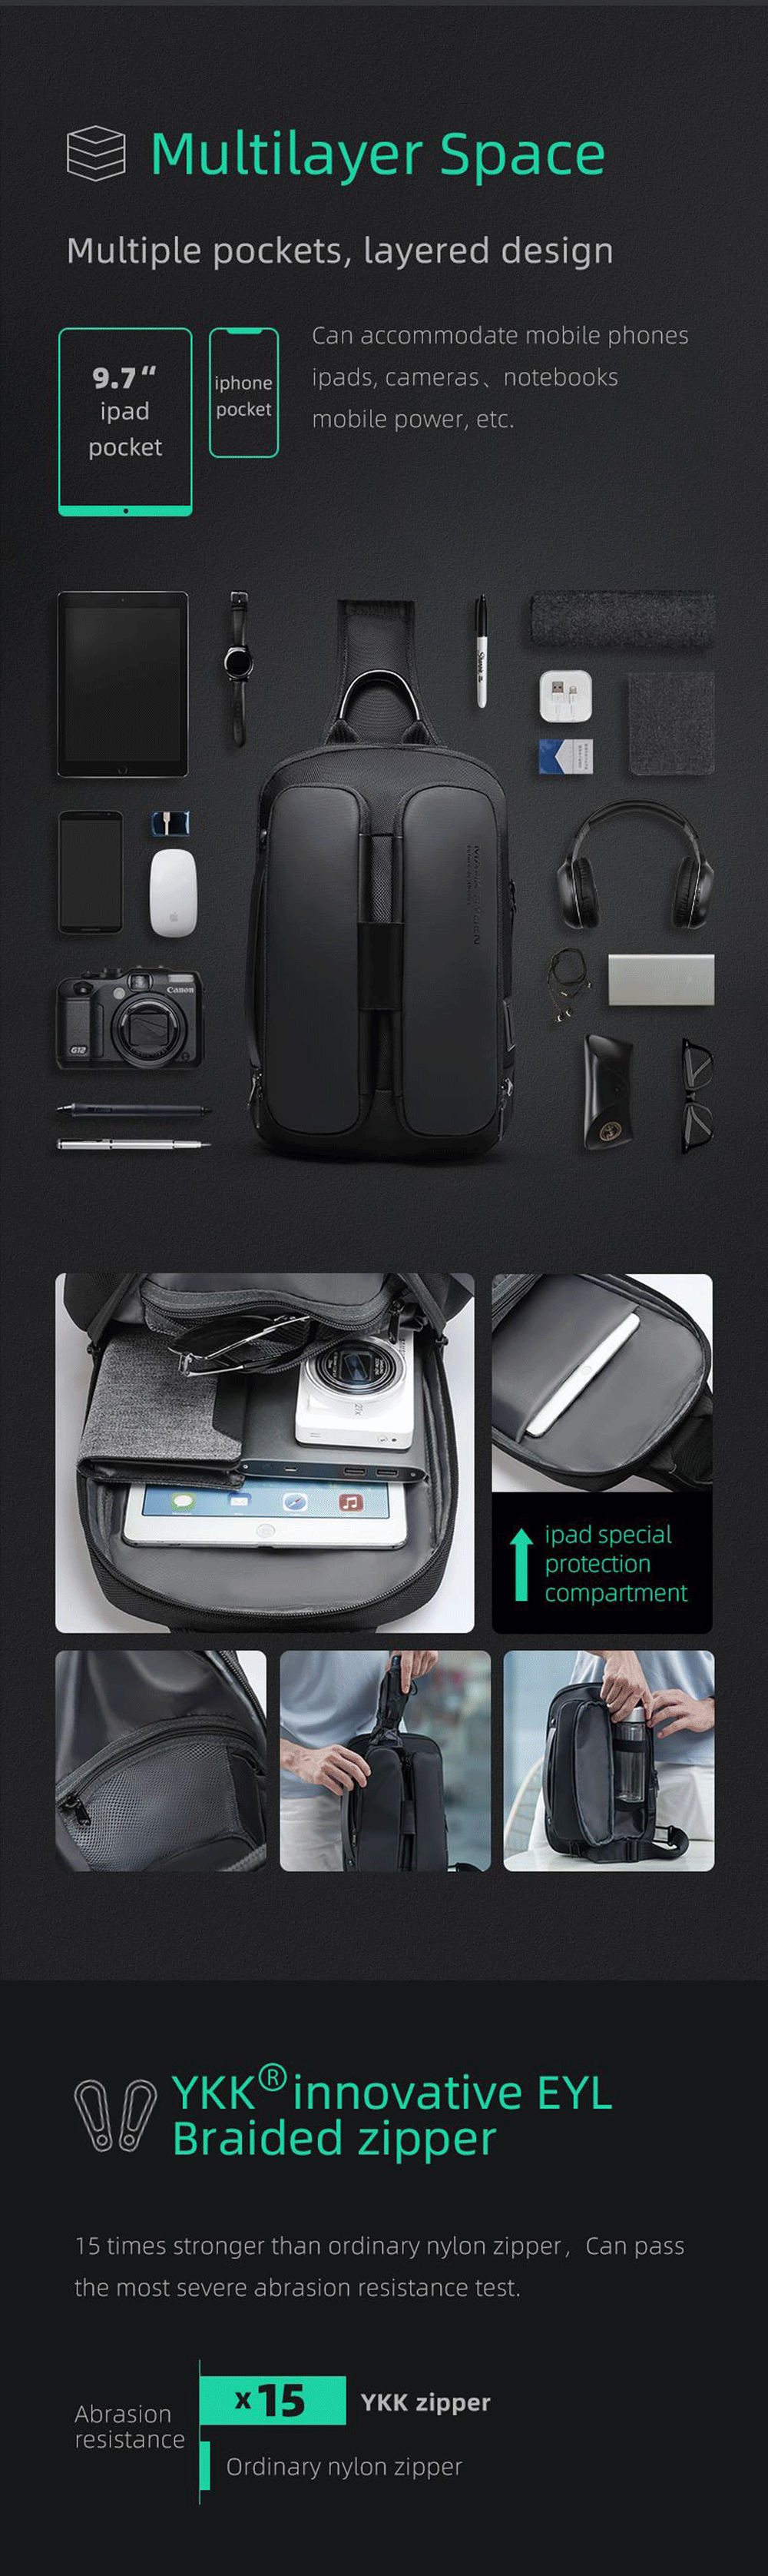 Mark-Ryden-MR7219-Anti-theft-Chest-Bag-Crossbody-Bag-Business-Bag-USB-Charging-Men-Handbag-Travel-St-1732513